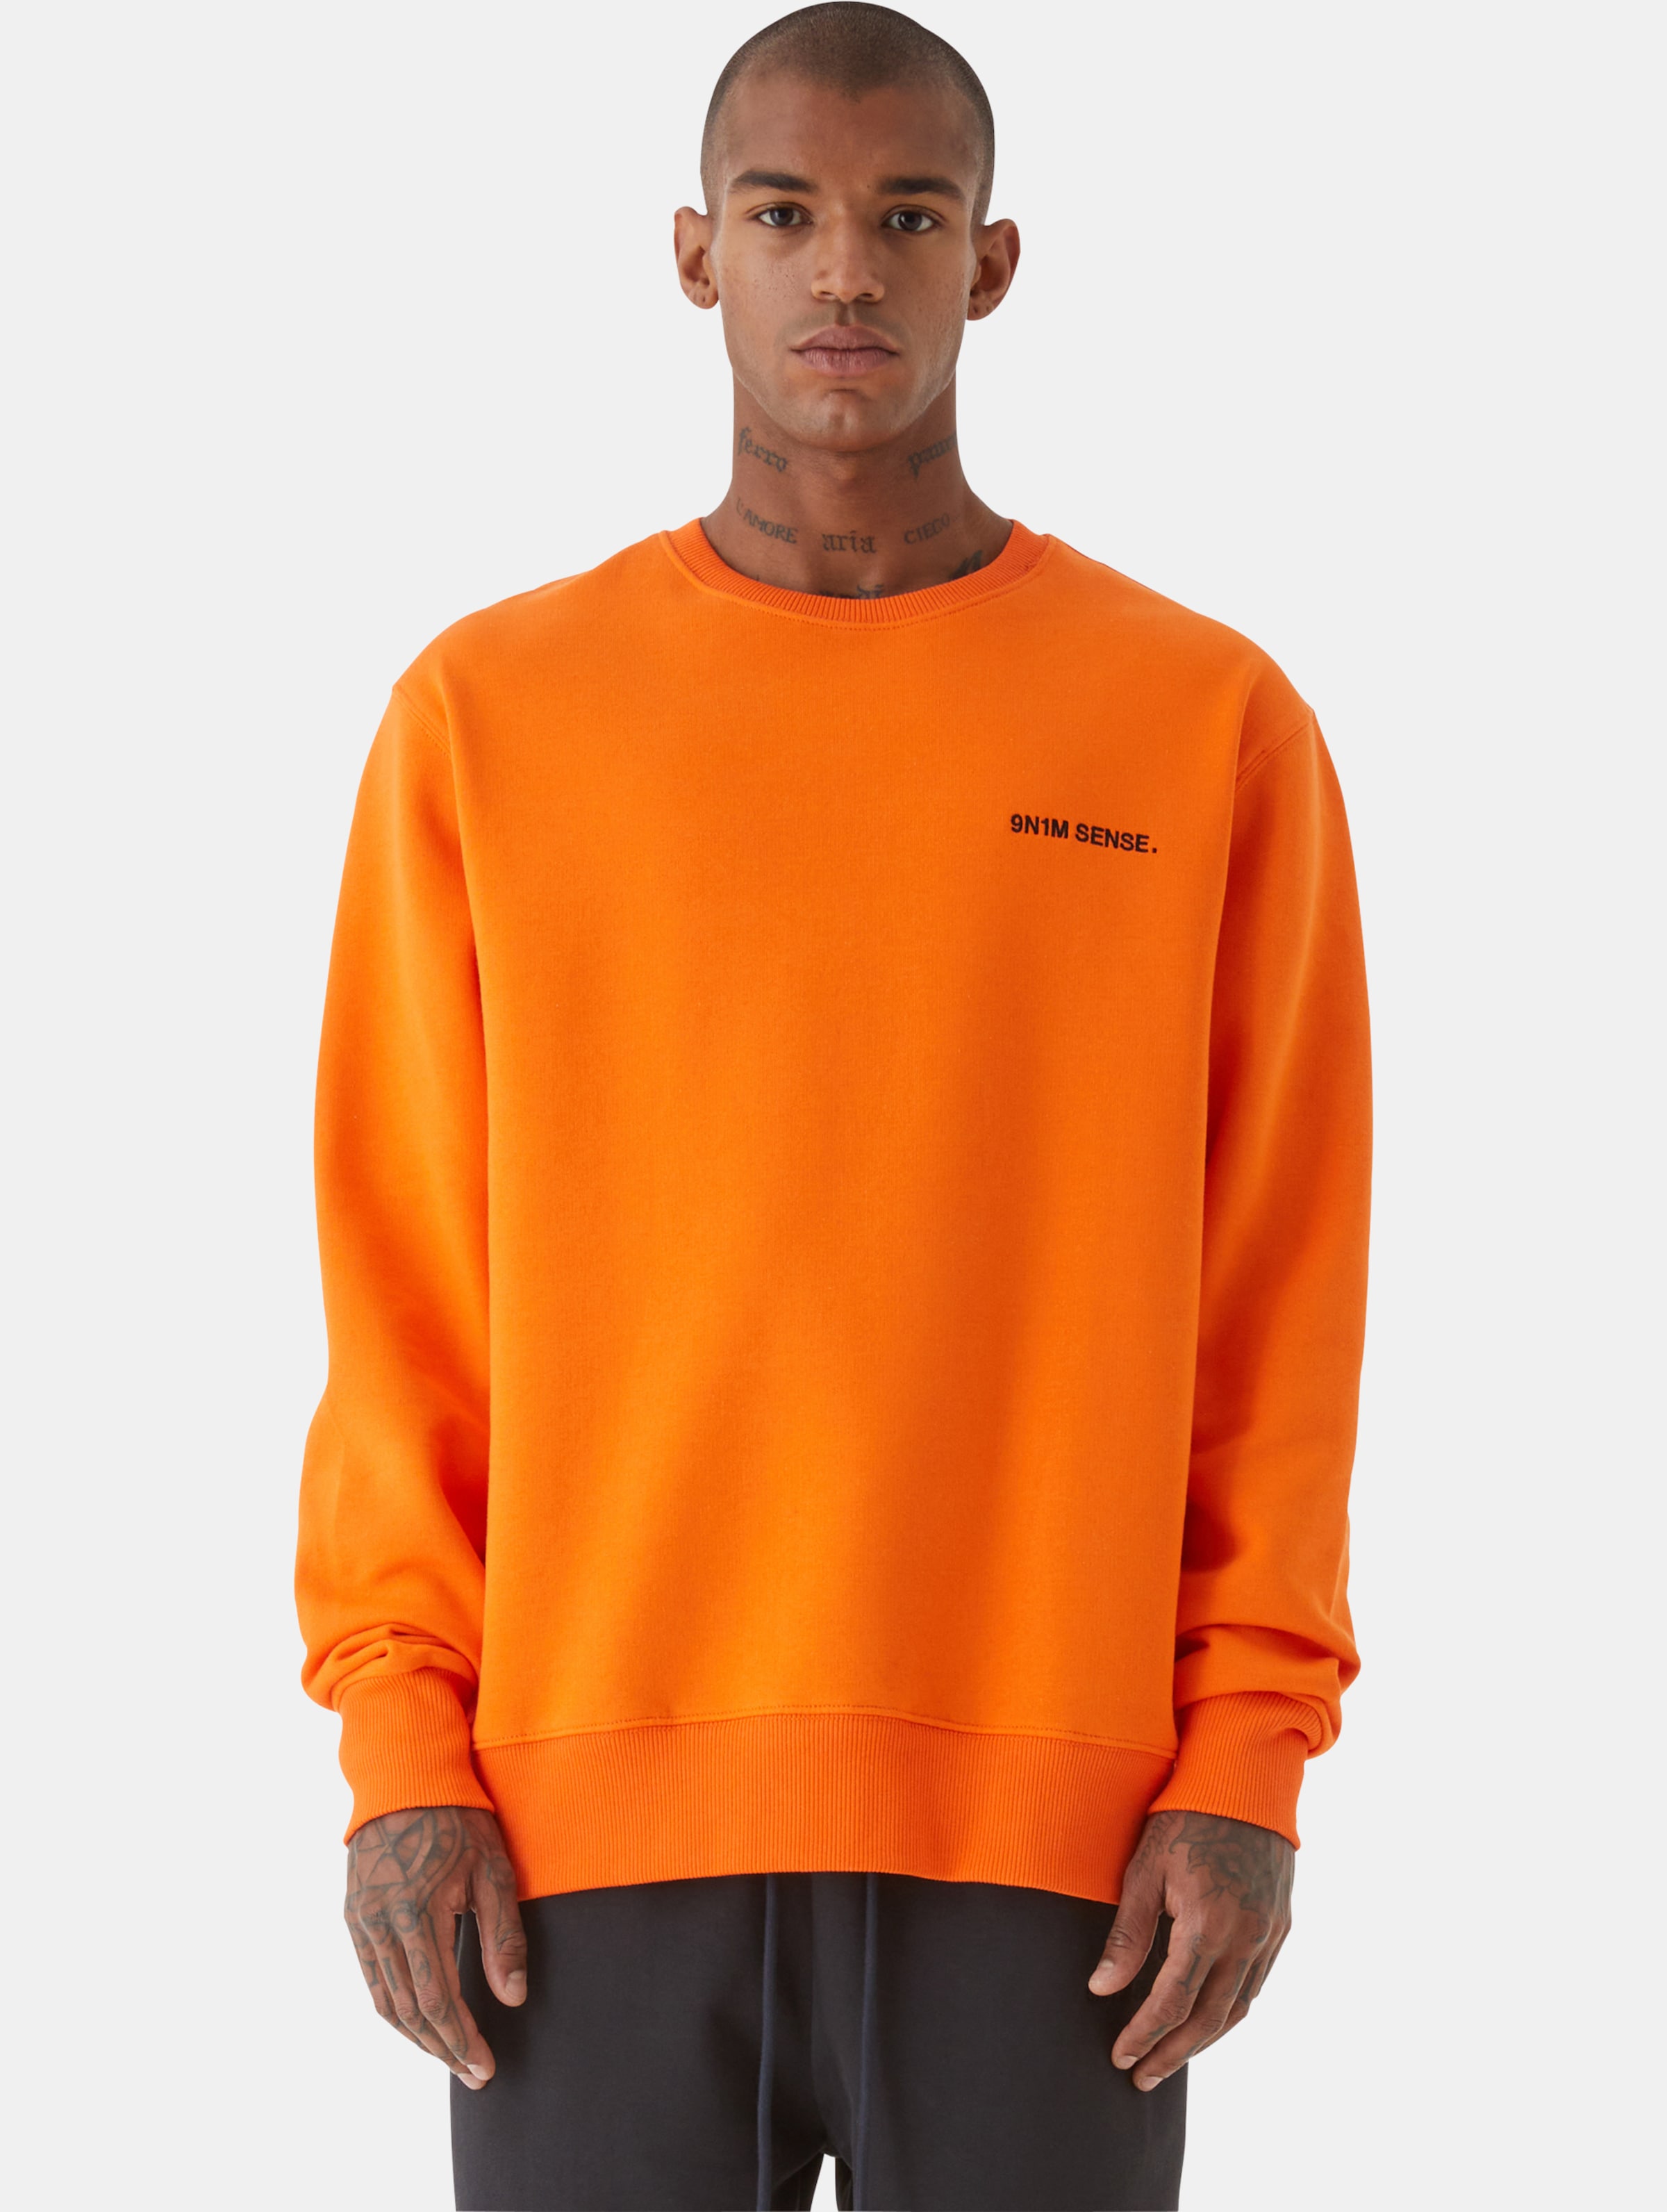 9N1M SENSE Essential Sweatshirt Mannen op kleur oranje, Maat XXL